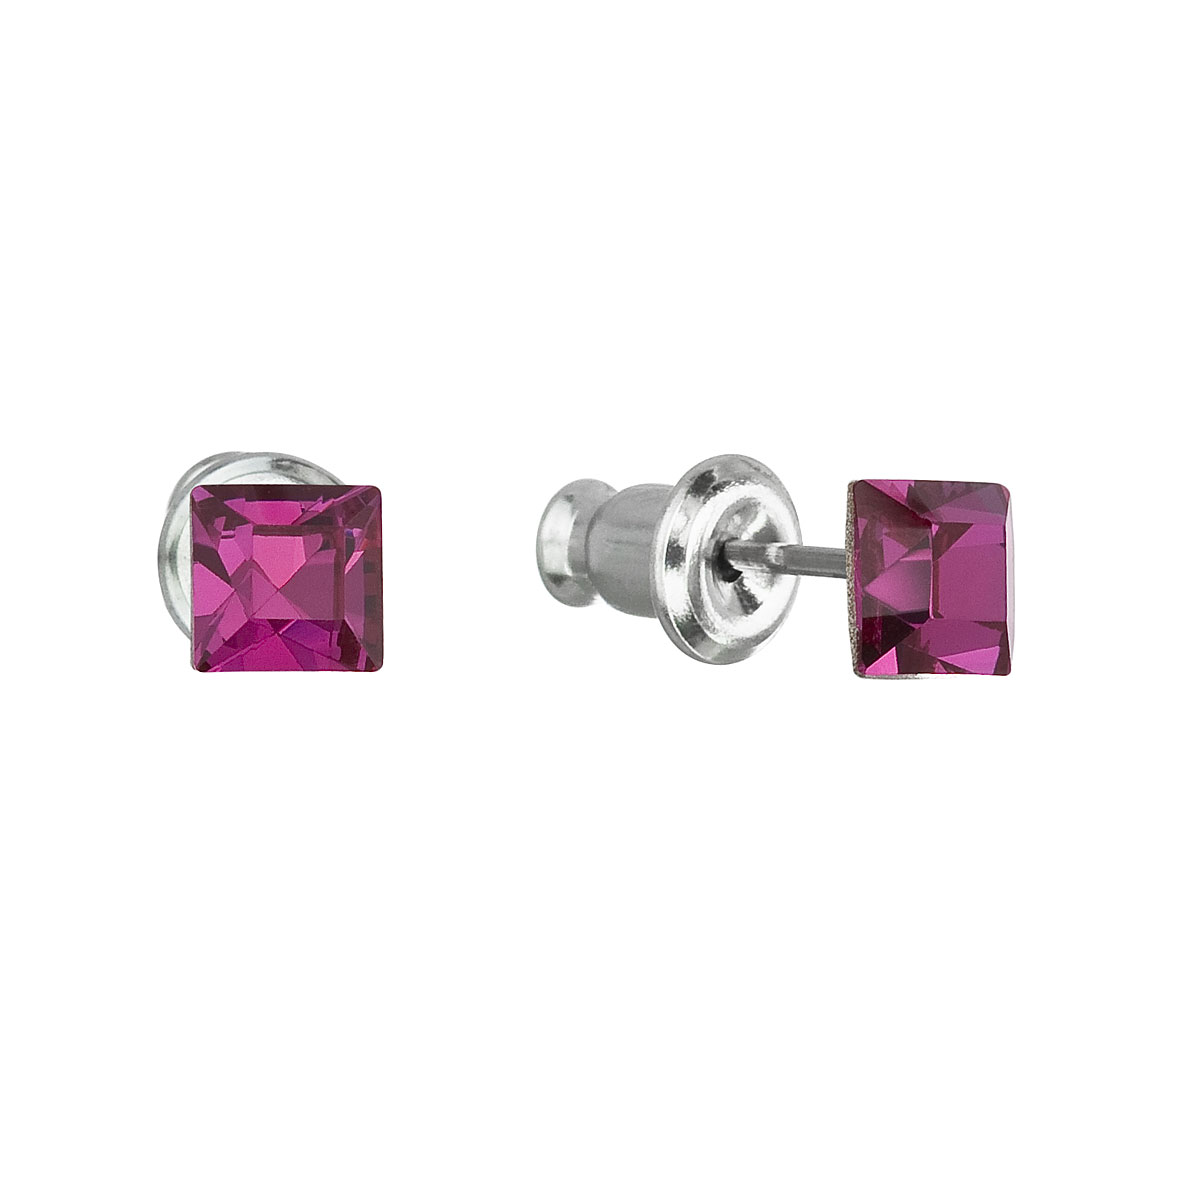 Evolution Group Náušnice bižuterie se Swarovski krystaly růžová čtverec 51052.3 fuchsia